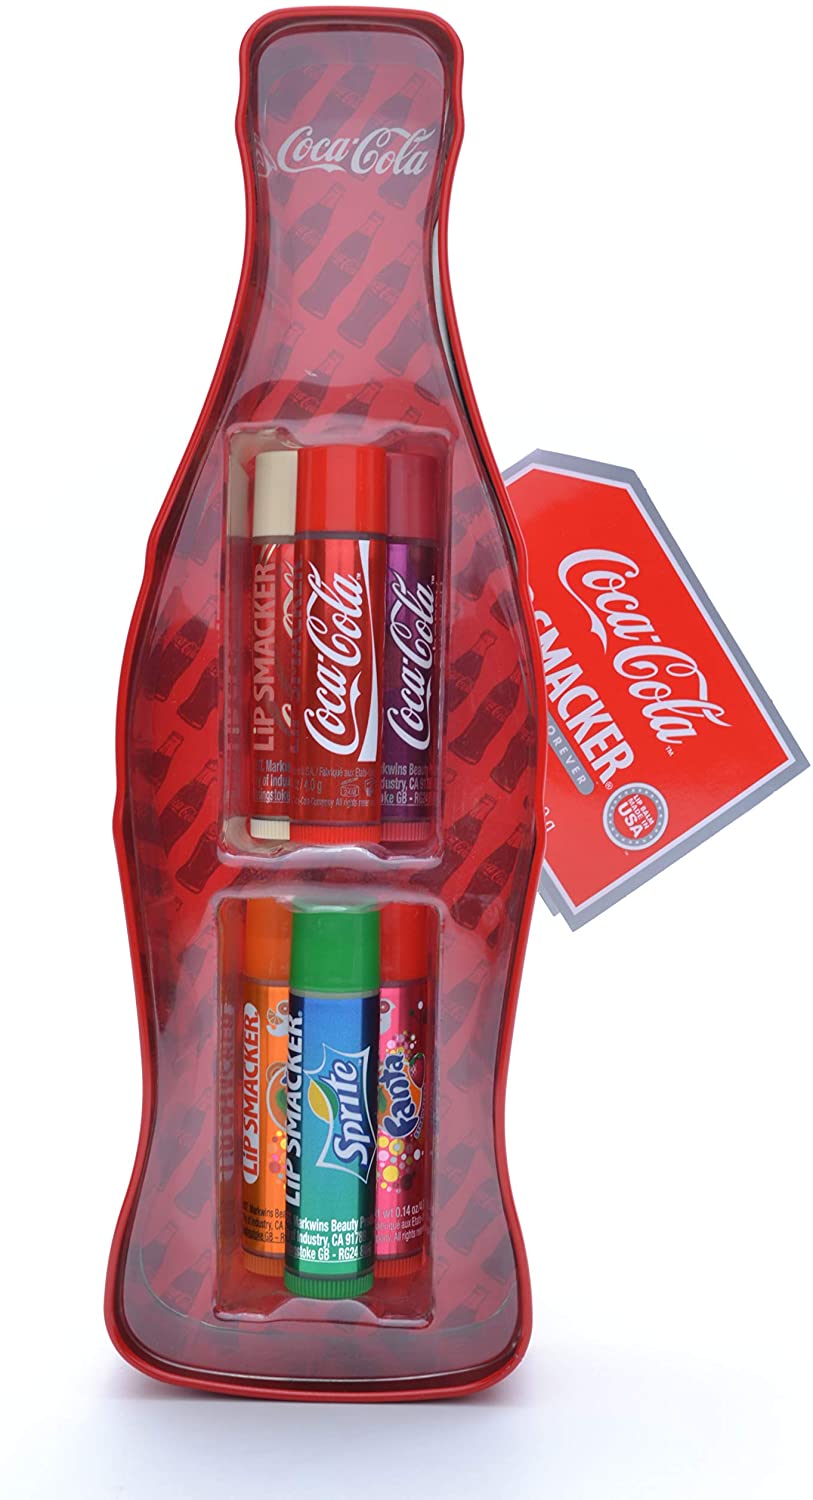 Lip Smacker - Set 6 Cây Son Coca Coca Vỉ Nhôm Vị Truyền Thống - LipSmaker Coca Cola Vintage Bottle Tint